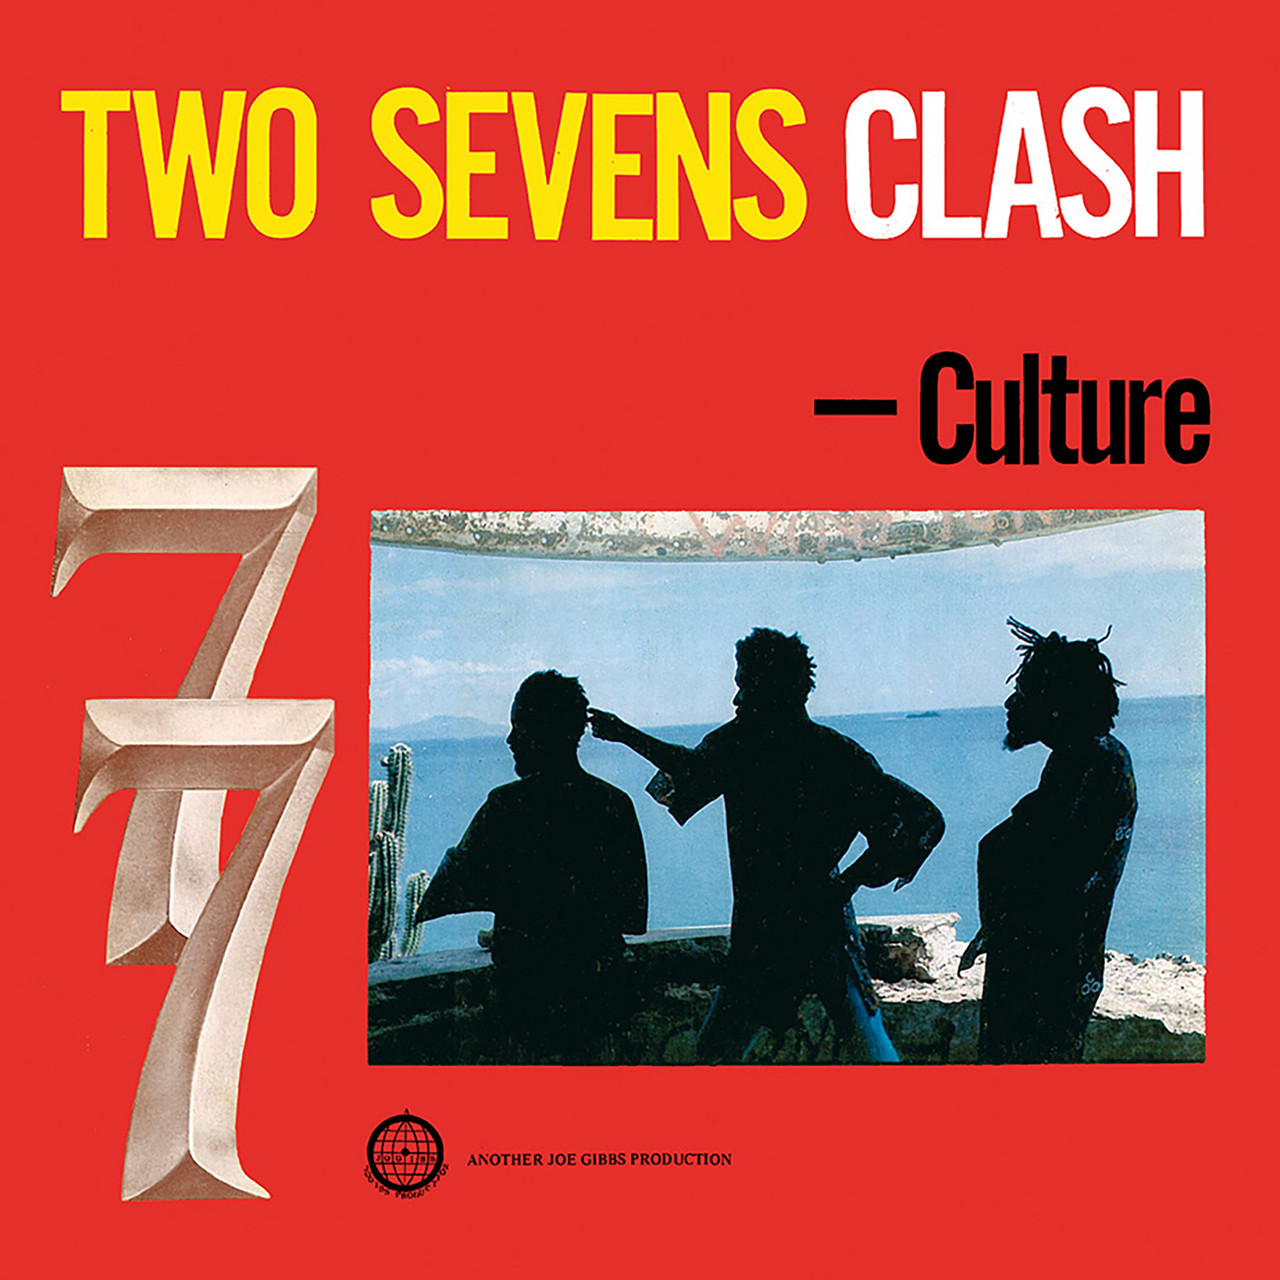 Two Sevens Clash Deluxe - Culture (2CD) - VP Reggae